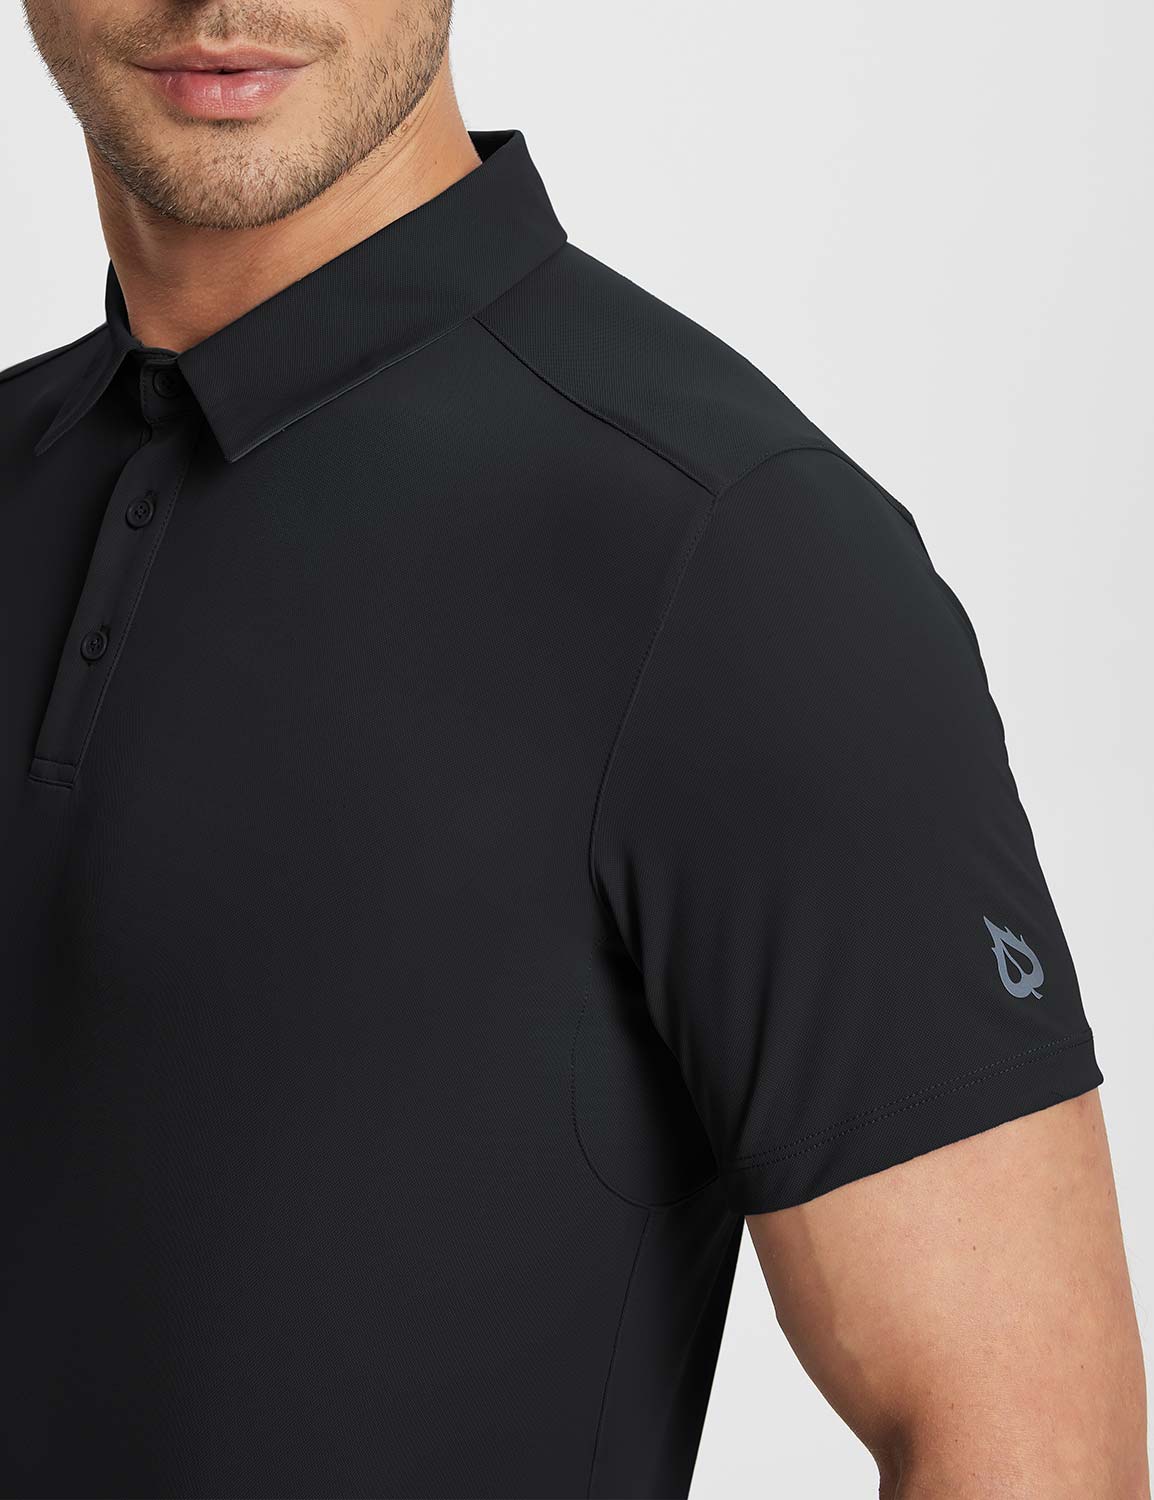 Baleaf Men's Laureate UPF50+ Golf Polo Shirt (Website Exclusive) dfa020 Jet Black Details